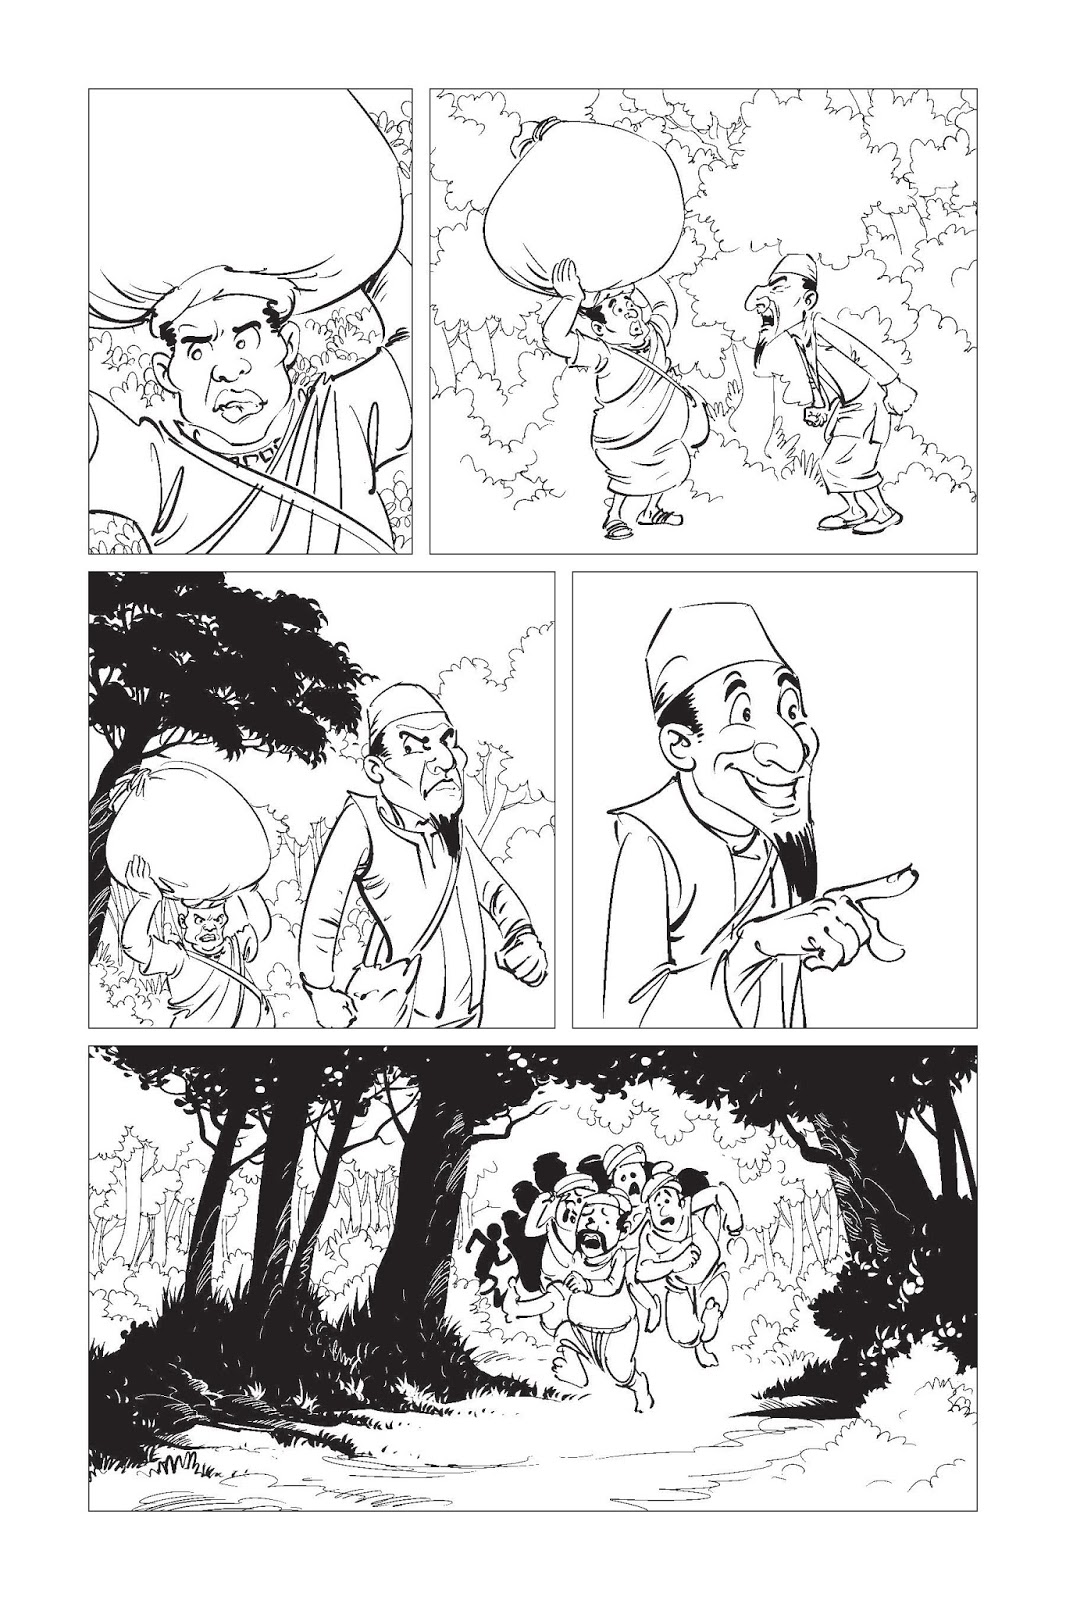 funny comics graphic novel page ink illustration